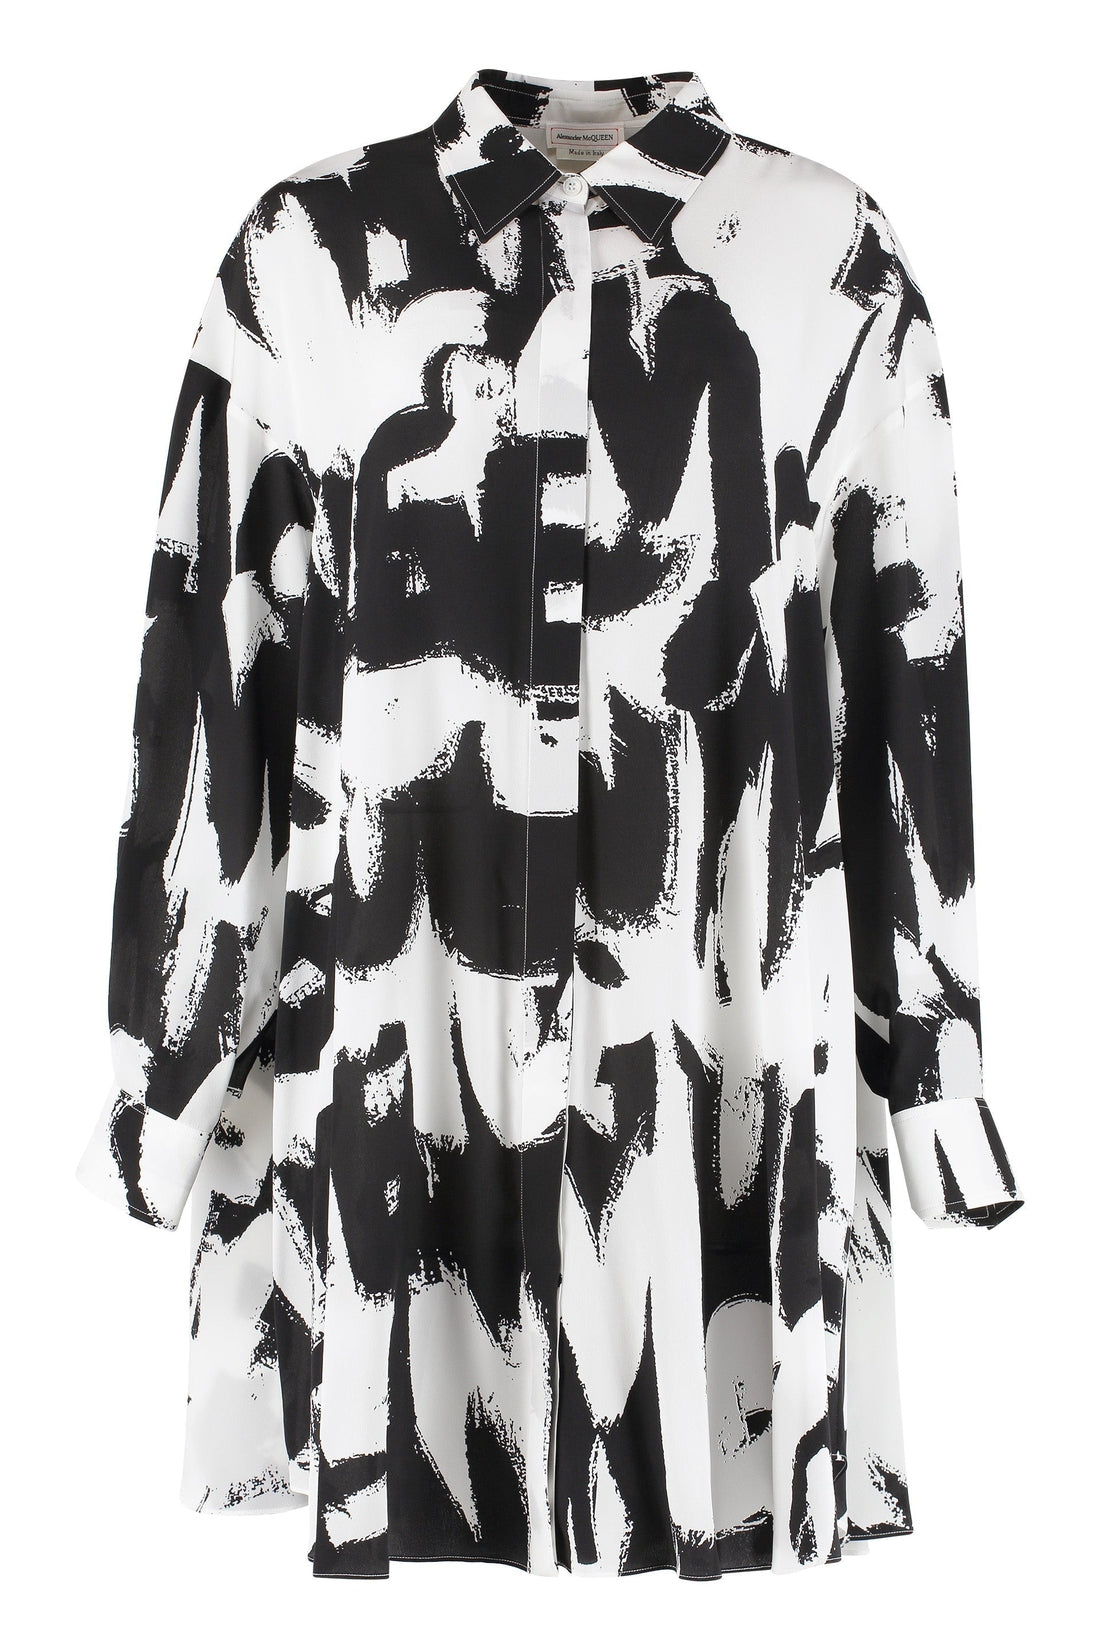 Alexander McQueen-OUTLET-SALE-Printed silk shirtdress-ARCHIVIST